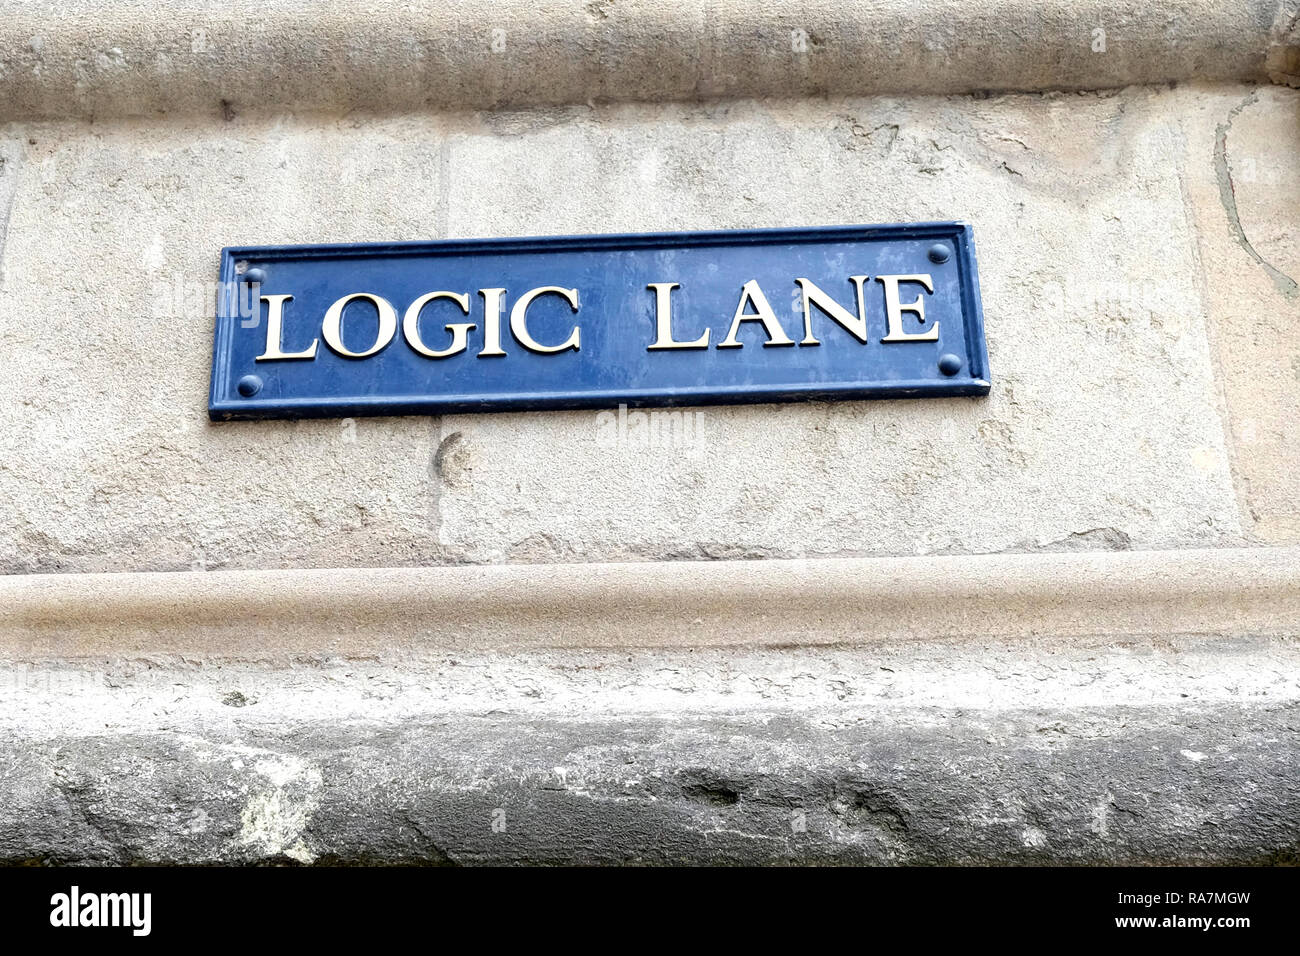 Logic lane, Oxford, UK Stock Photo